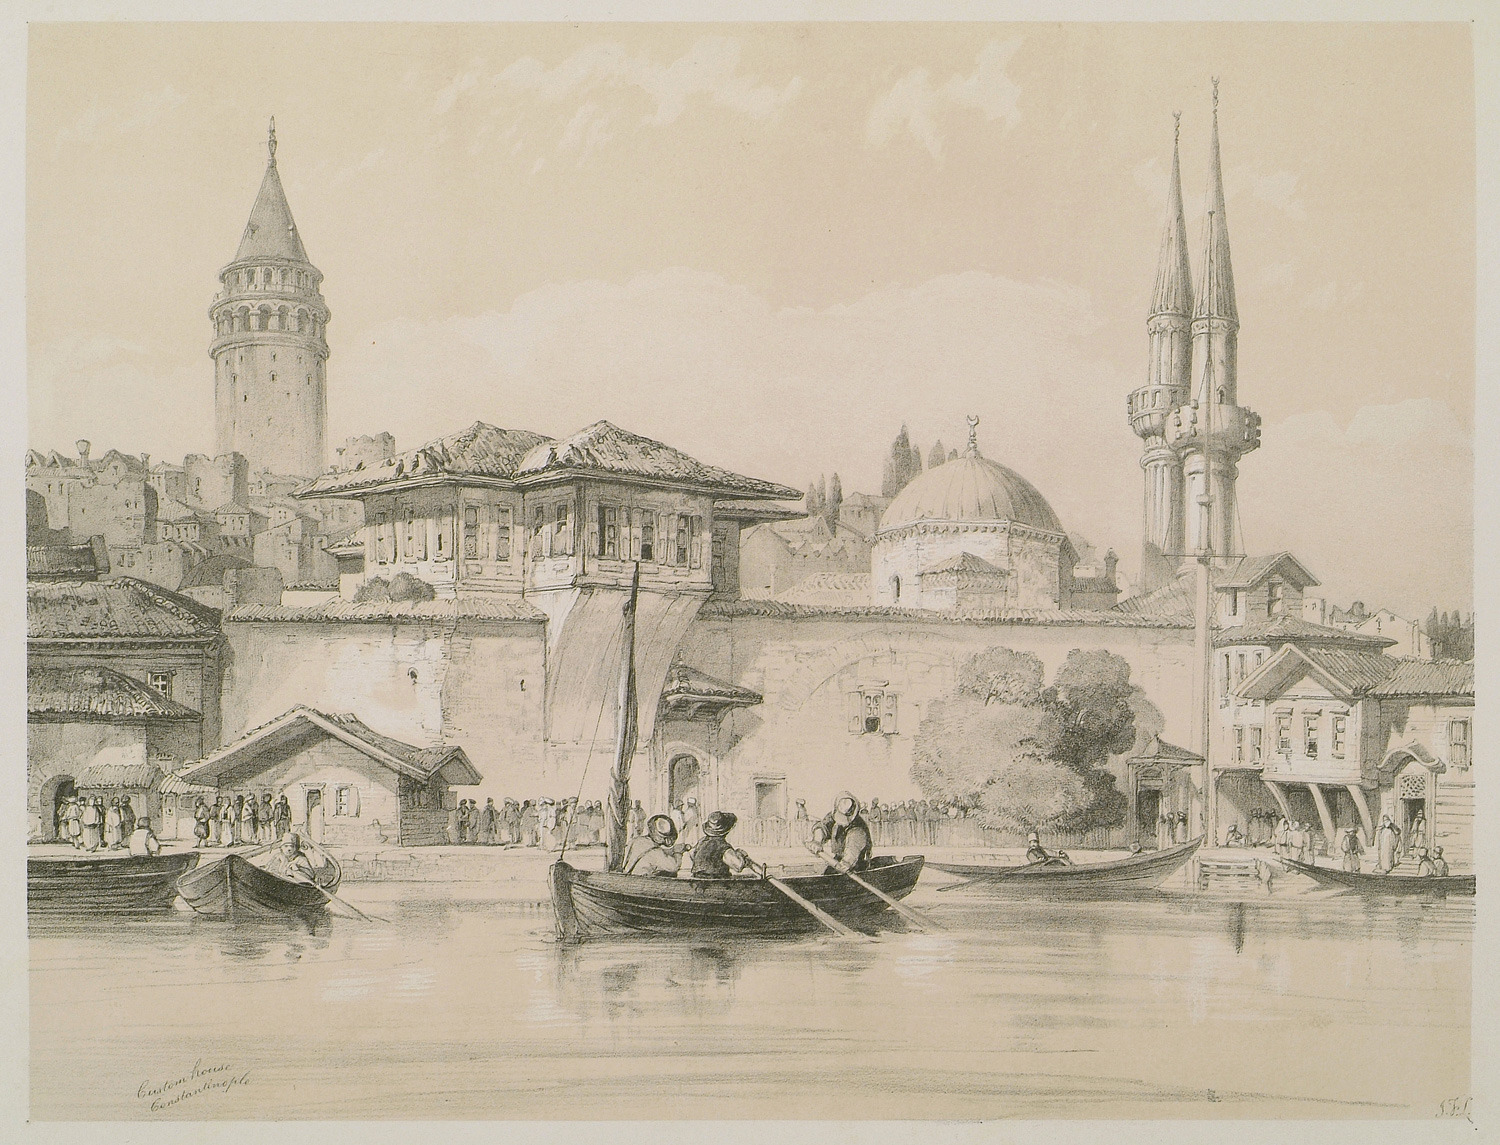 The Ottoman customs house at Karaköy. On the left the Galata Tower